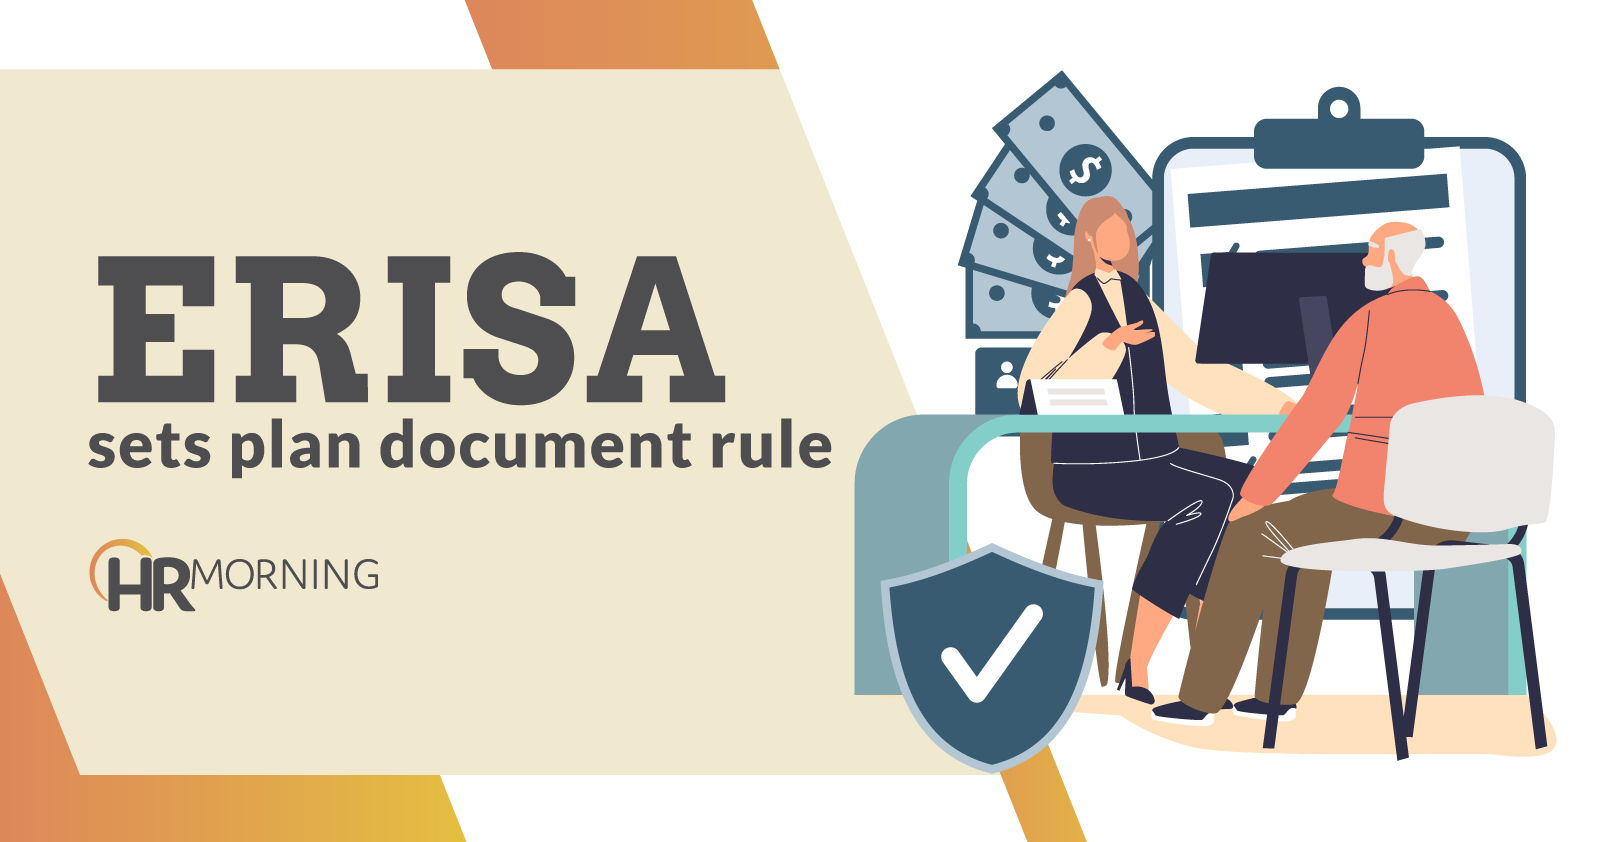 ERISA sets plan document rule